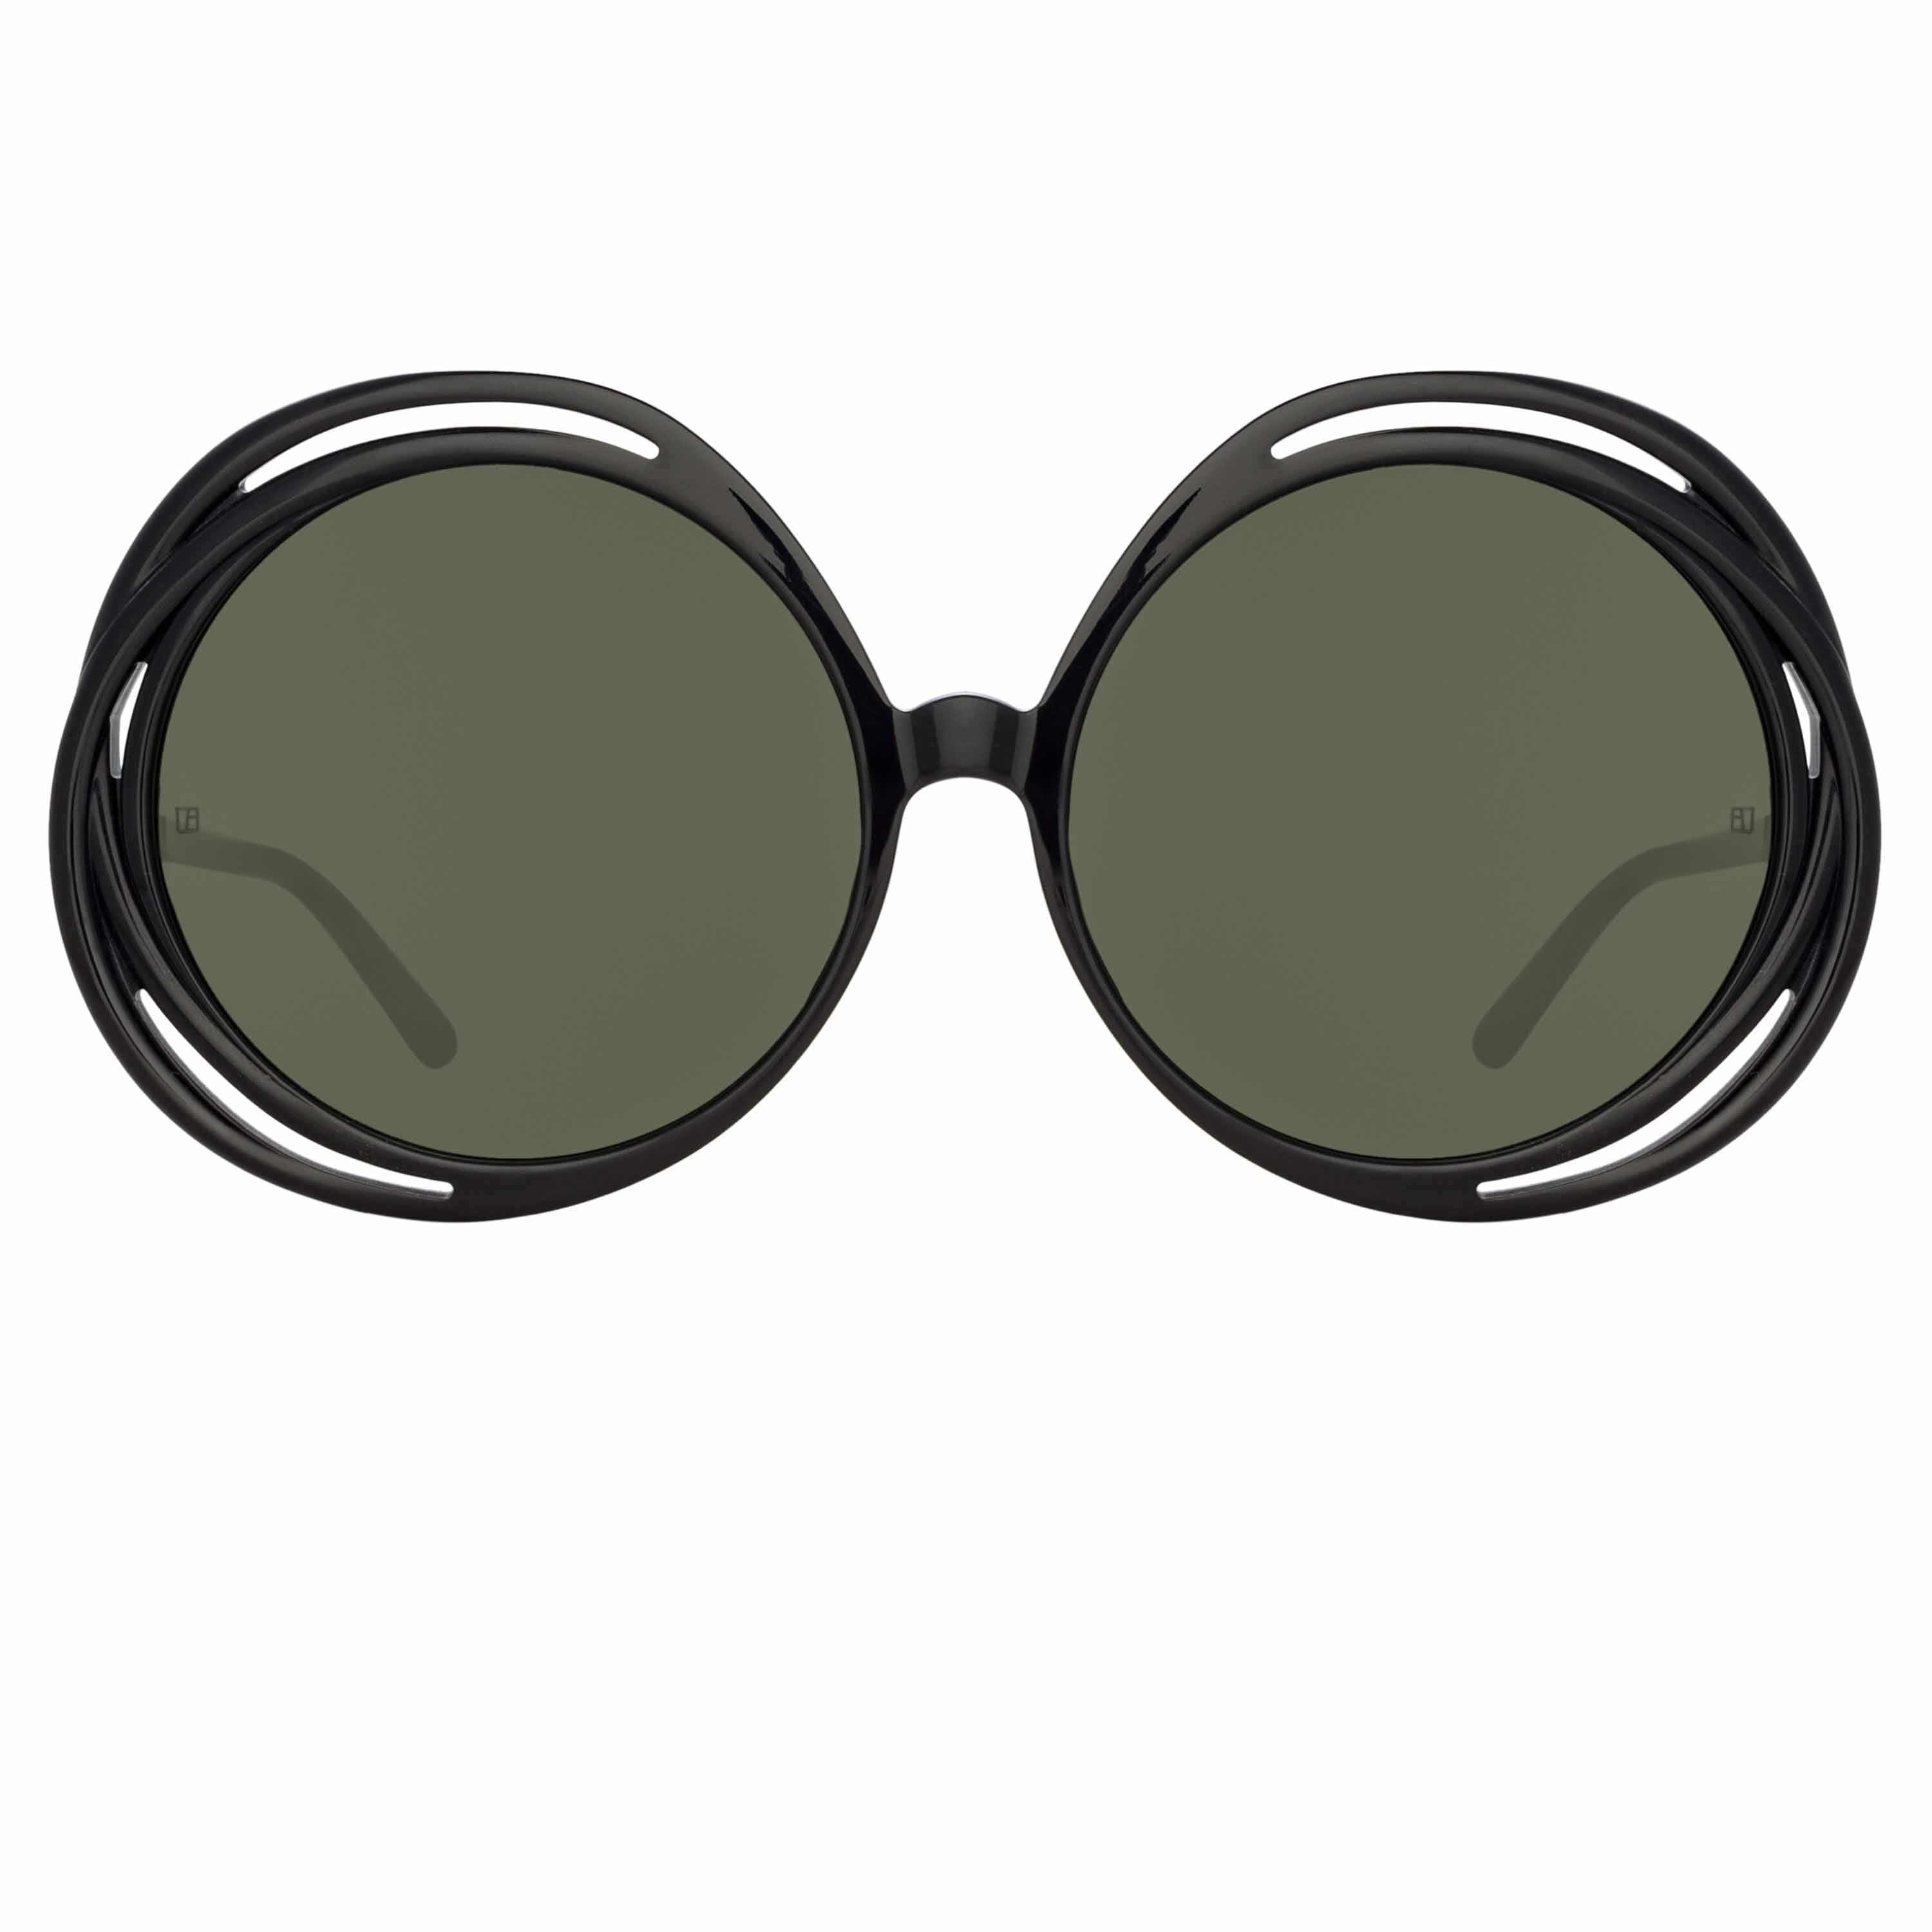 Ellen Round Sunglasses in Black